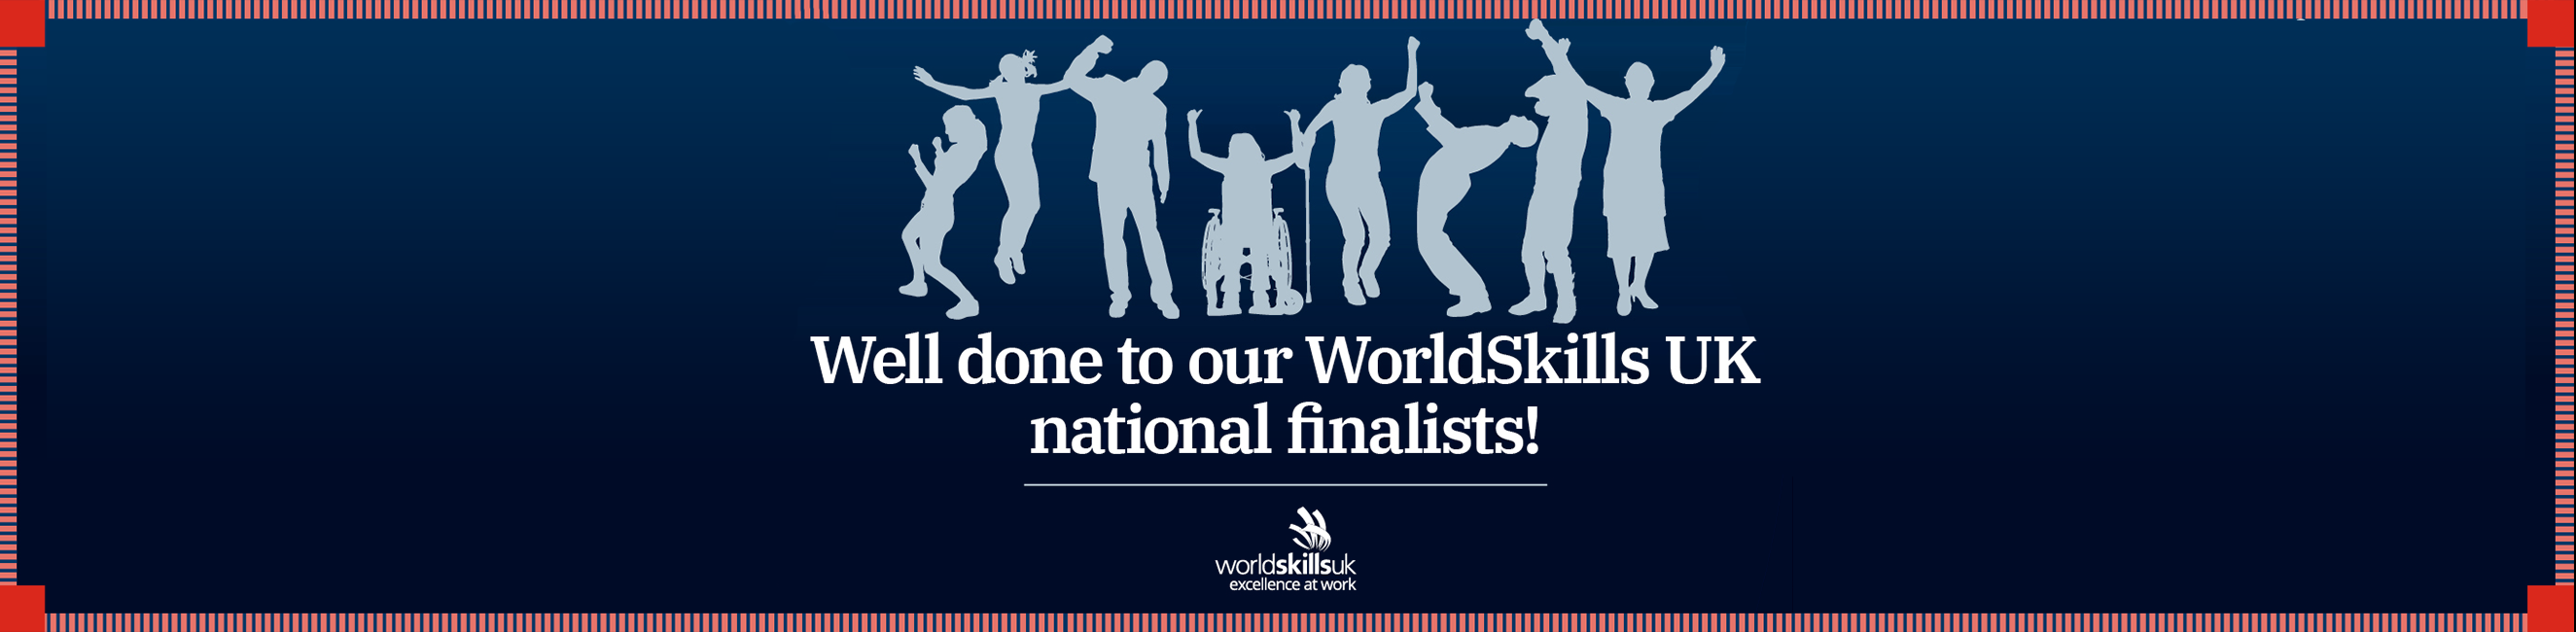 world skills graphic congratulating finalists with people celebrating weston college workskills